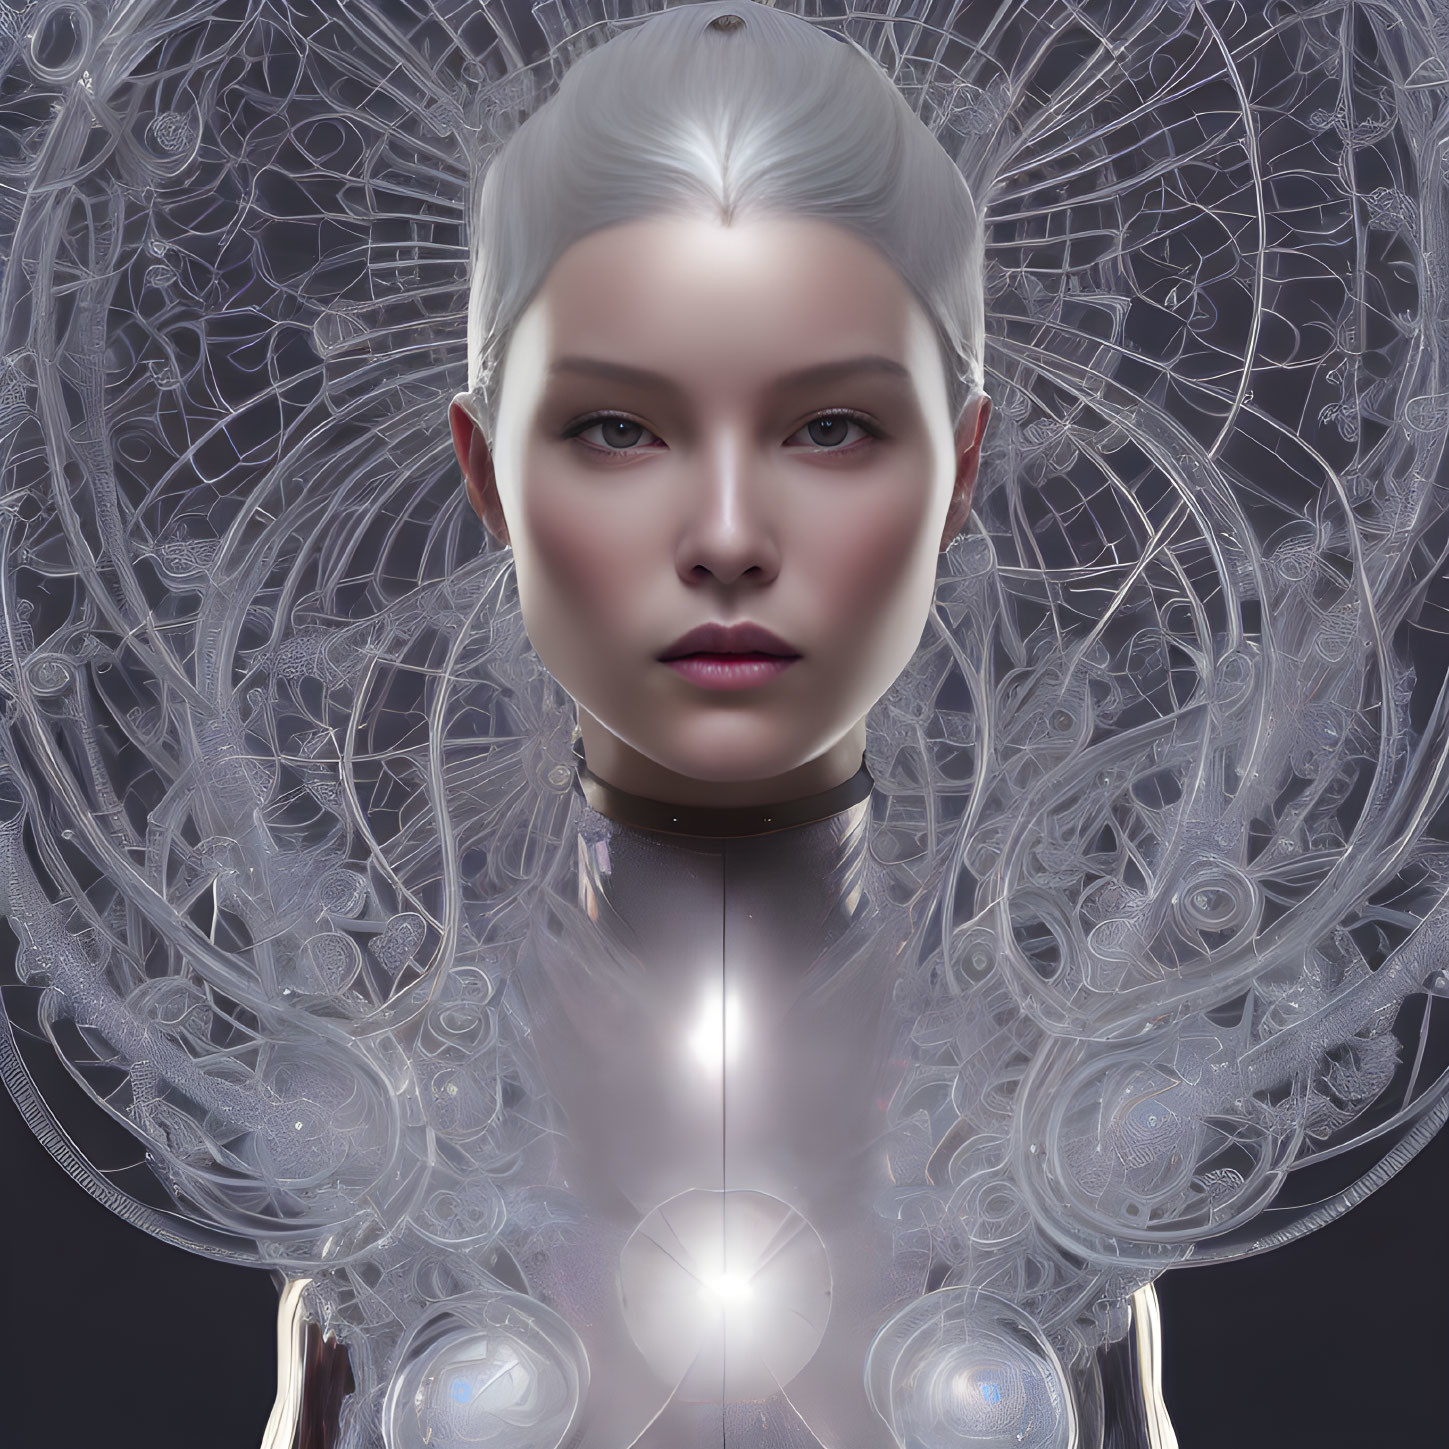 Futuristic woman with glowing white hair and metallic halo collar